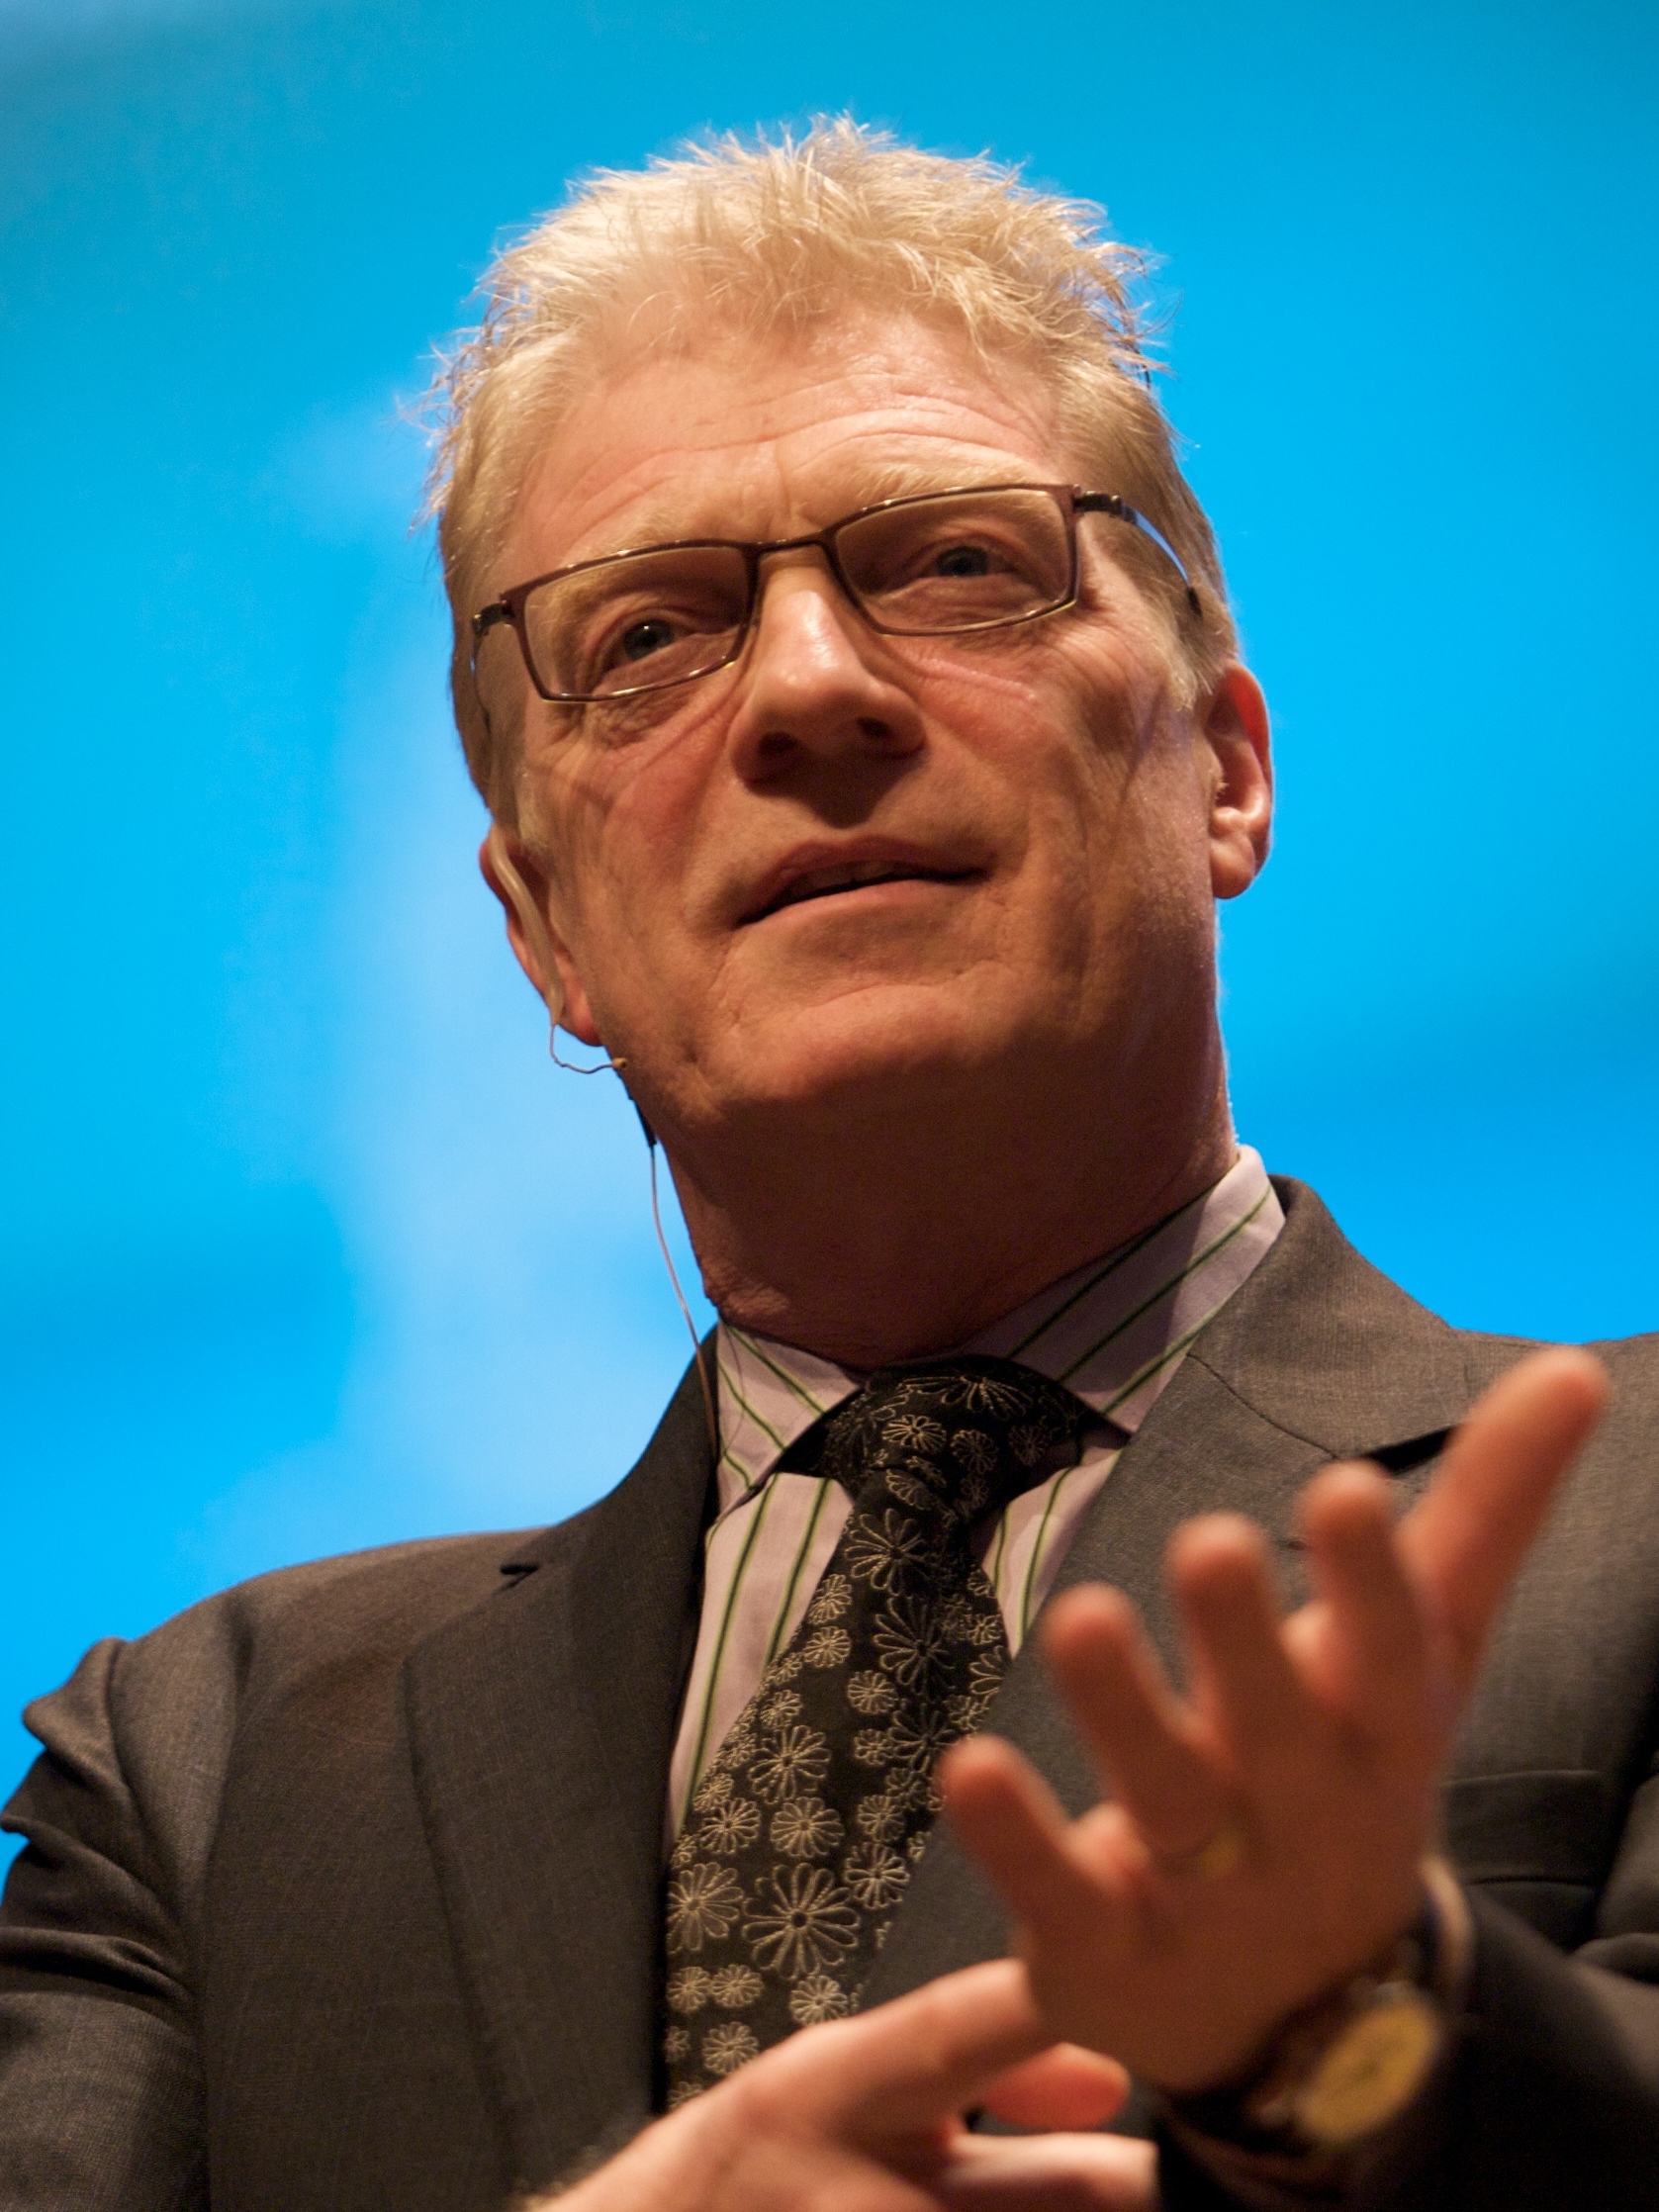 Sir Ken Robinson PhD